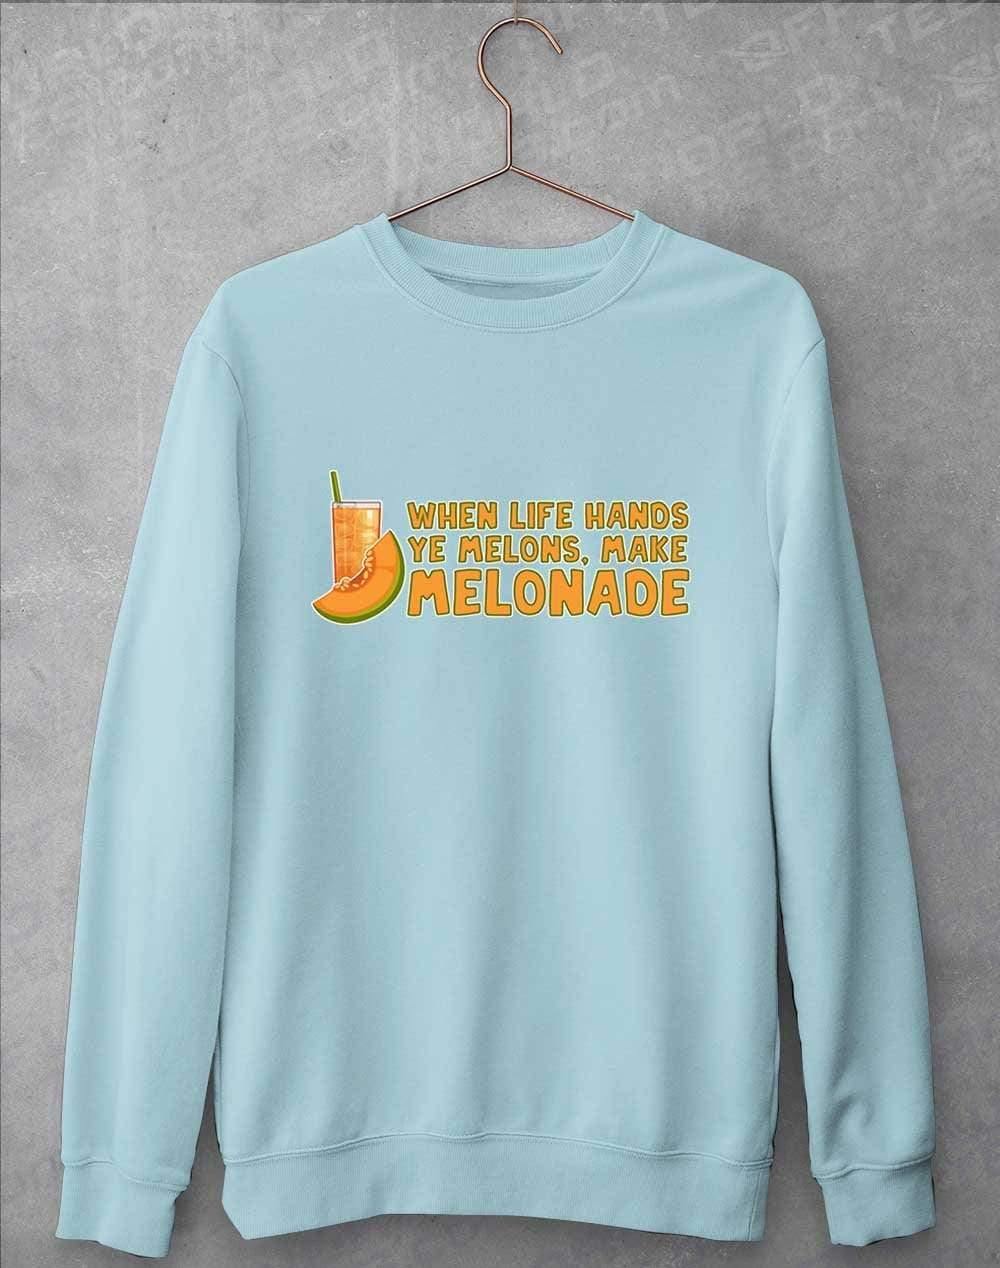 Make Melonade Sweatshirt S / Sky Blue  - Off World Tees